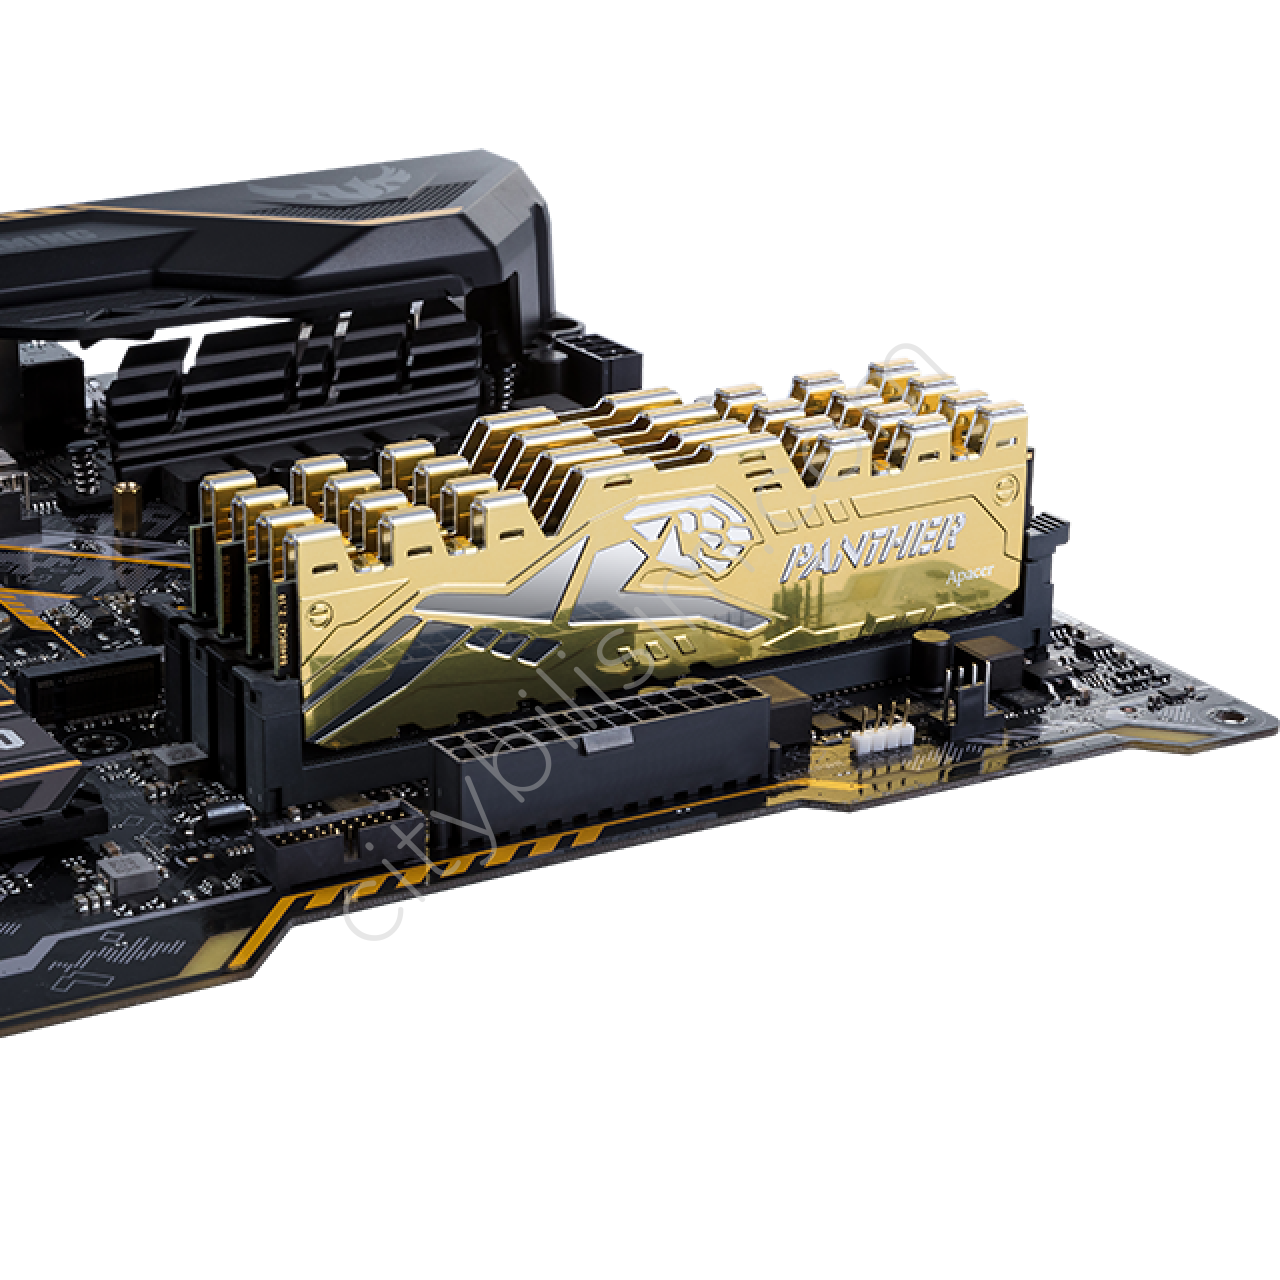 Apacer Panther Black-Gold 8GB (1x8GB) 3000Mhz CL16 DDR4 Gaming Ram (EK.08G2Z.GJC)